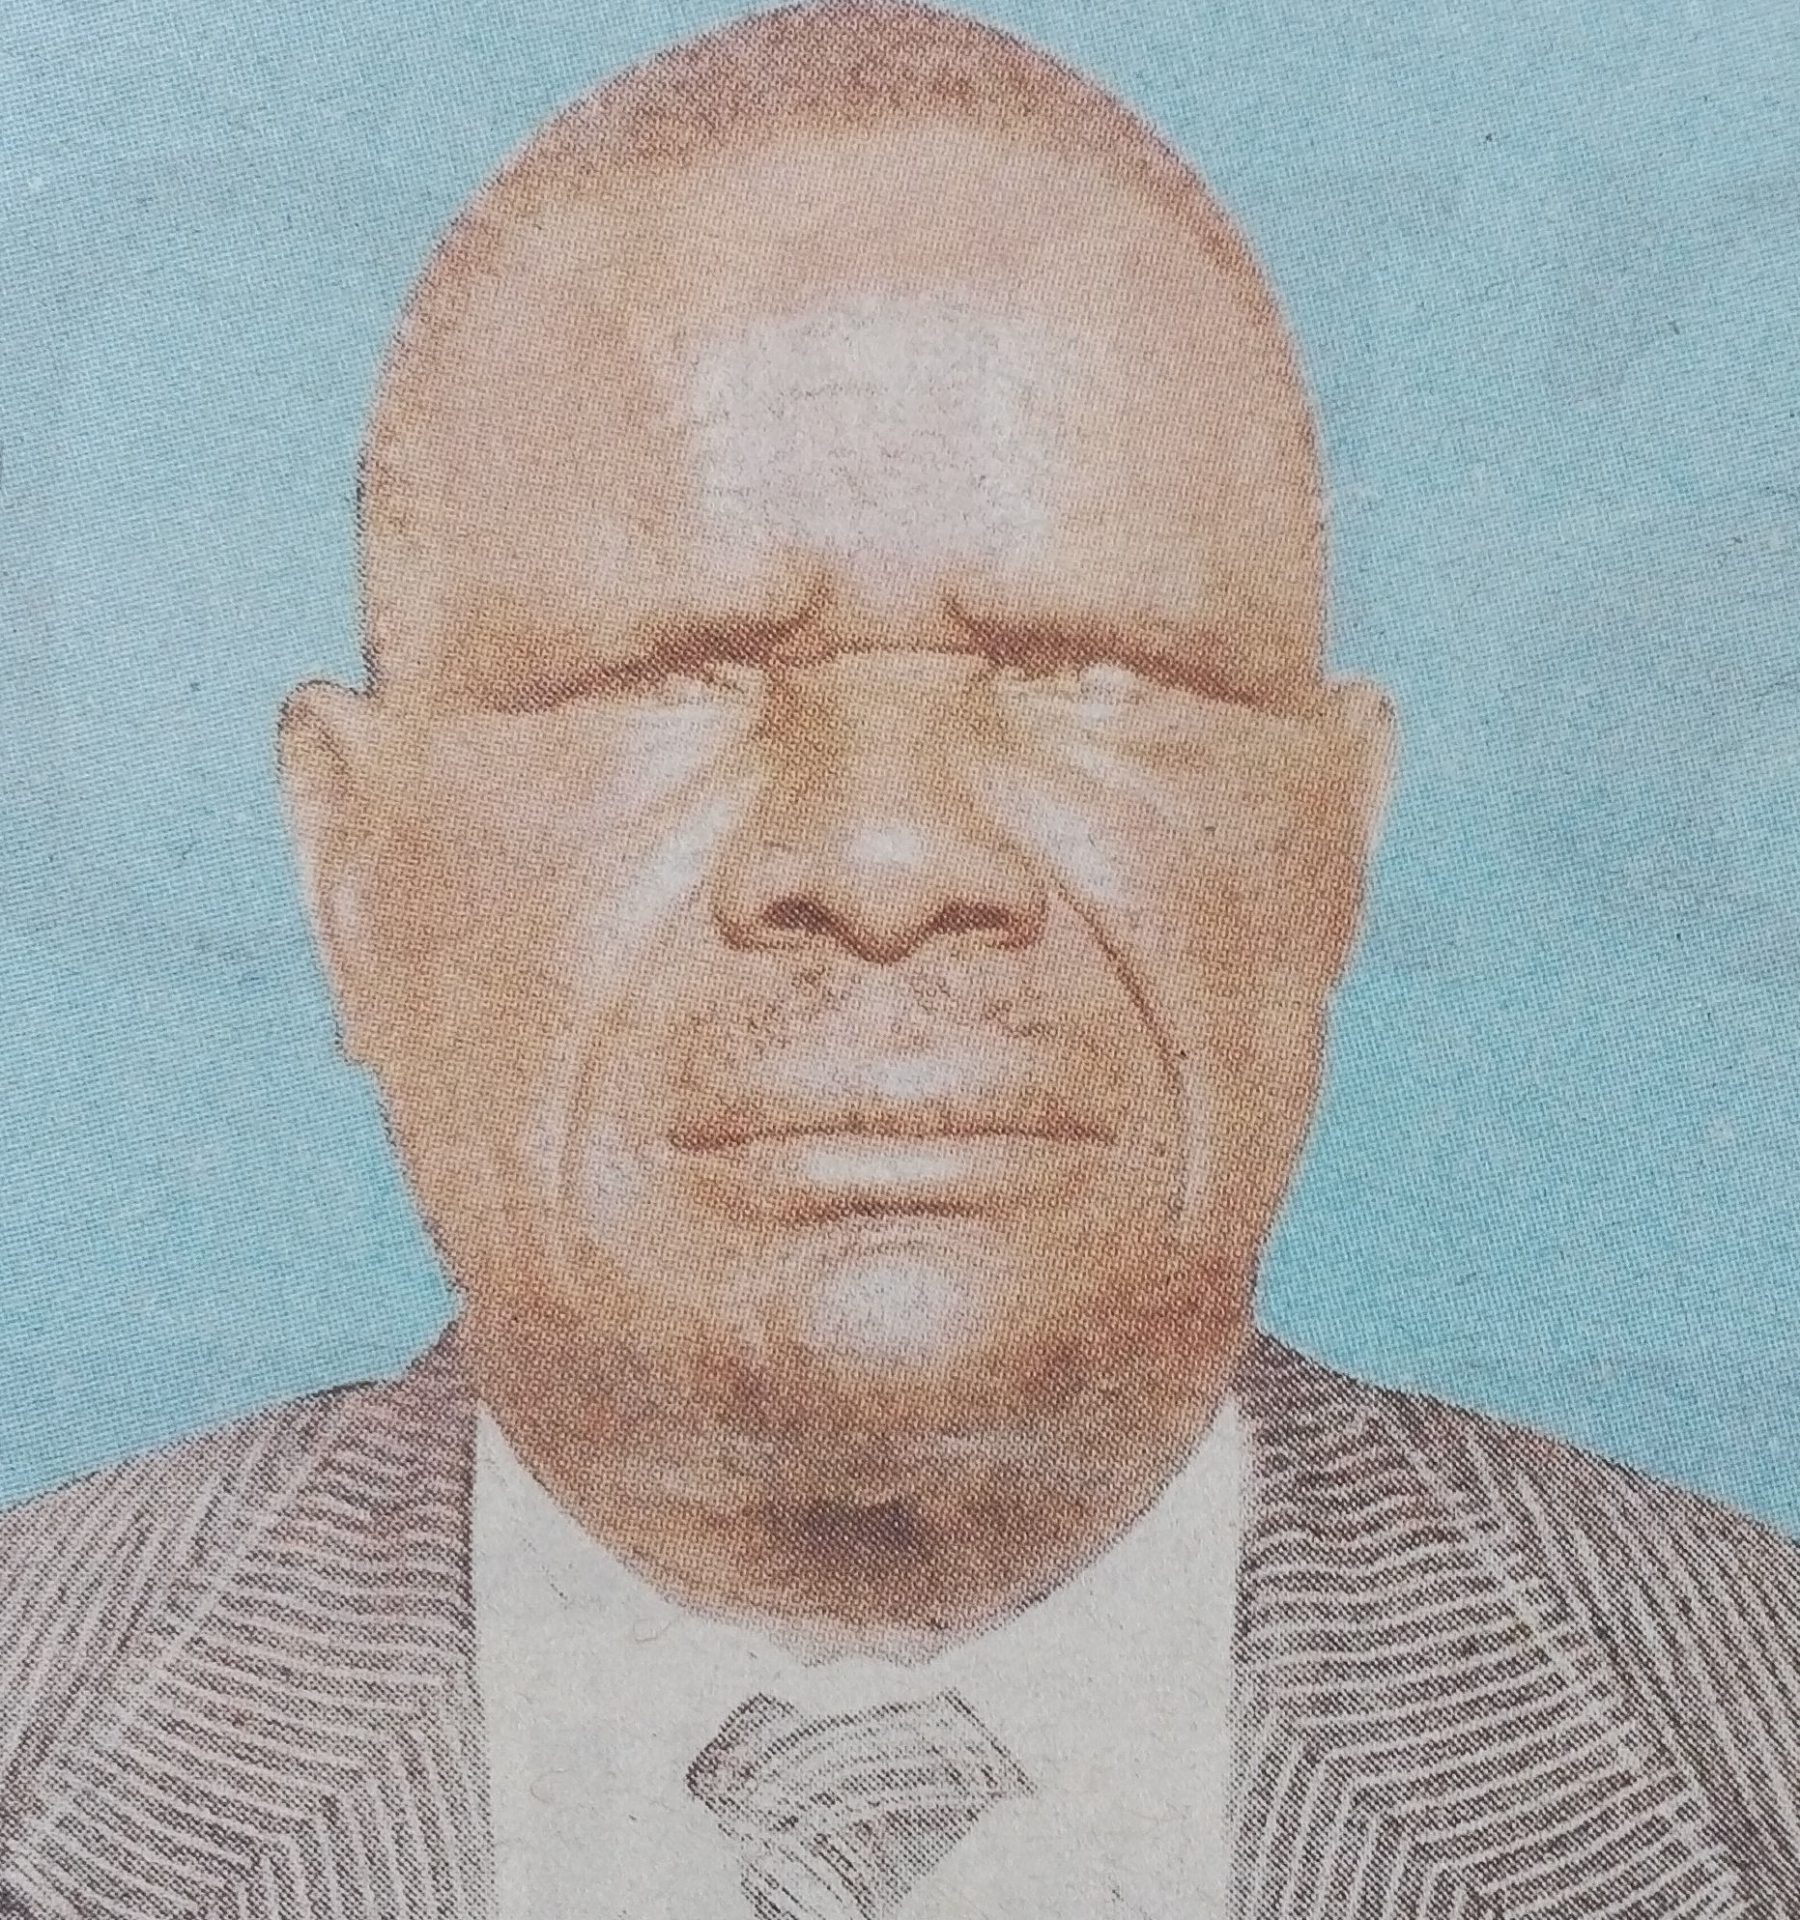 Obituary Image of Elijah Nandi Chikamai (ENC)